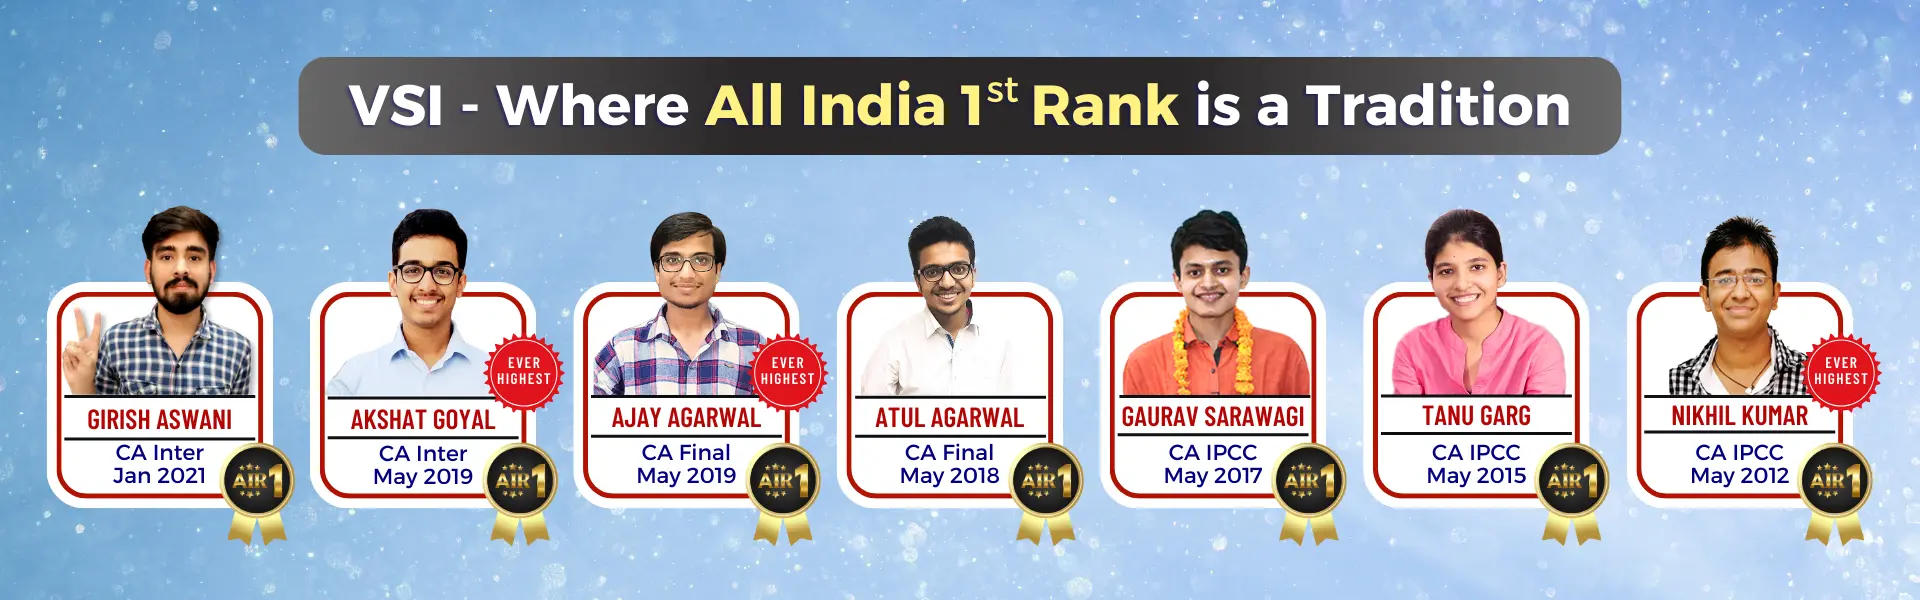 VSI All India 1st Rankers